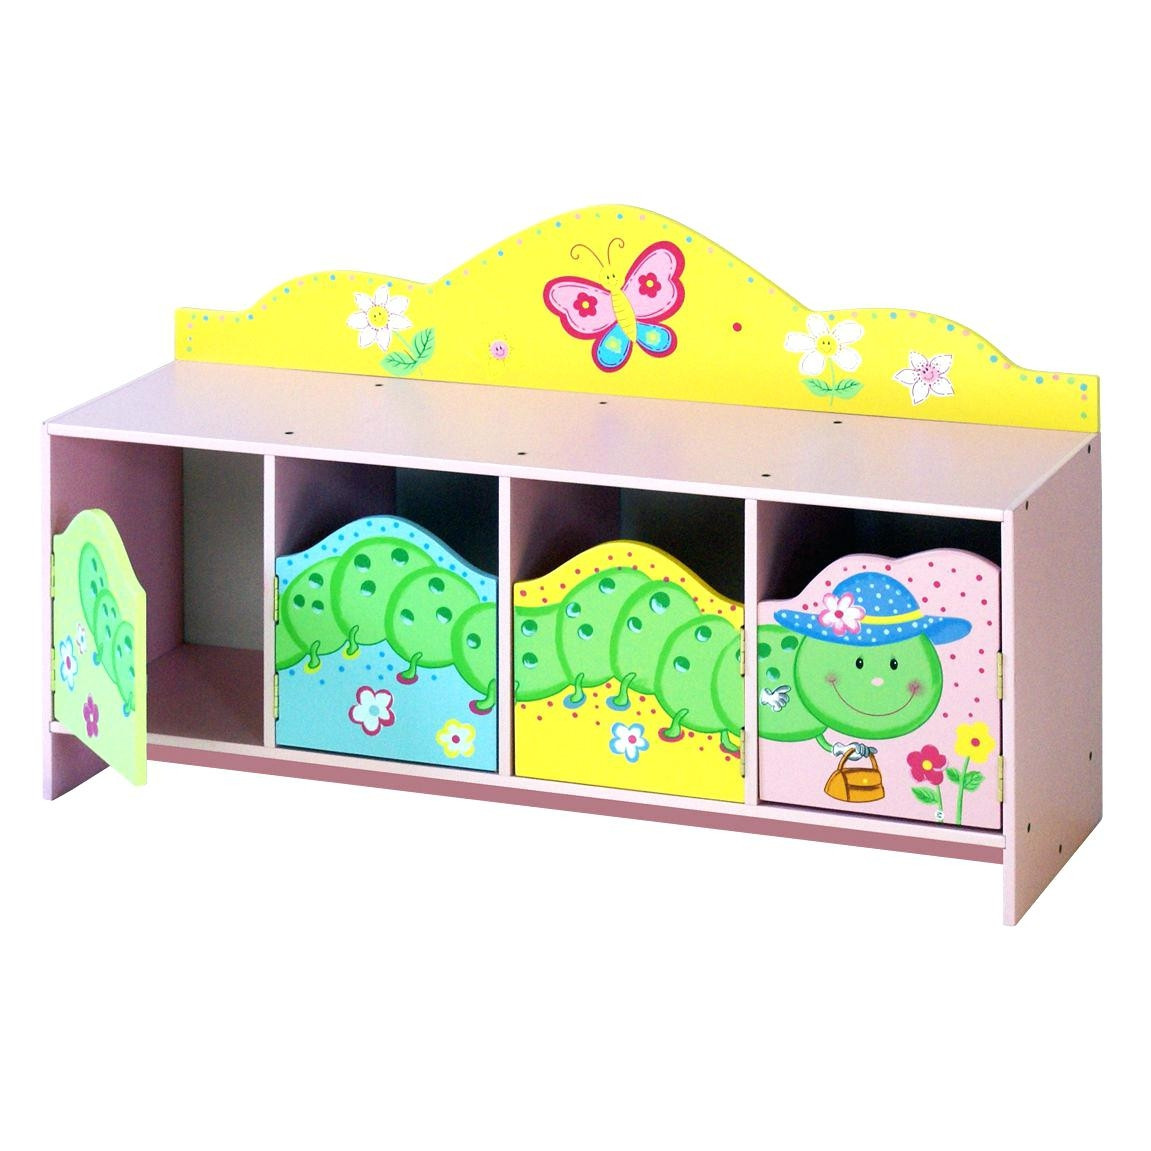 Kids Storage Bench With Cushion
 Badger Basket Kid’S Storage Bench With Cushion And 3 Bins